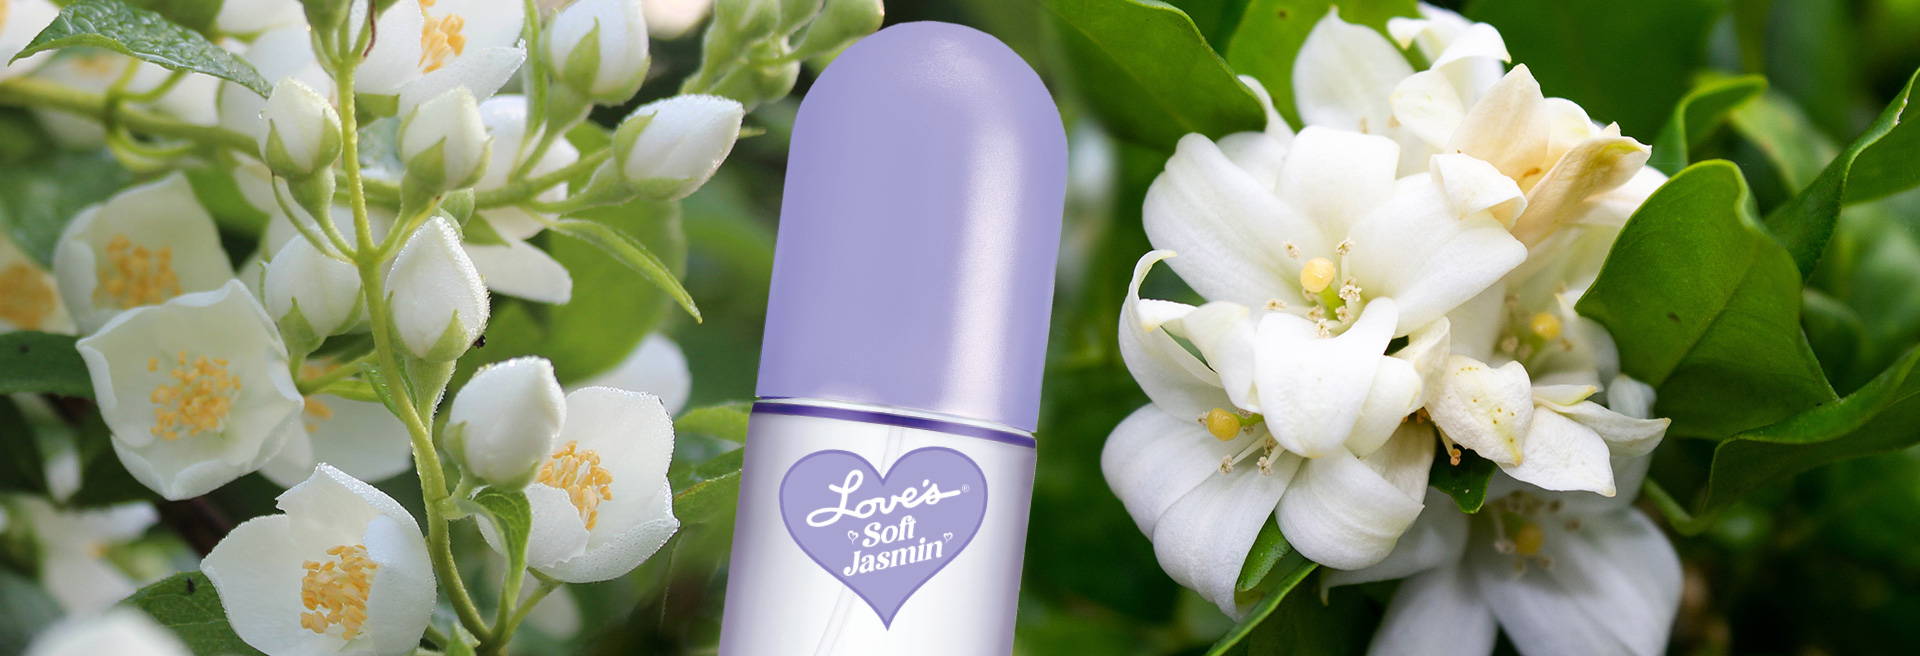 Bottle of Love's Jasmin in jasmine flowers.